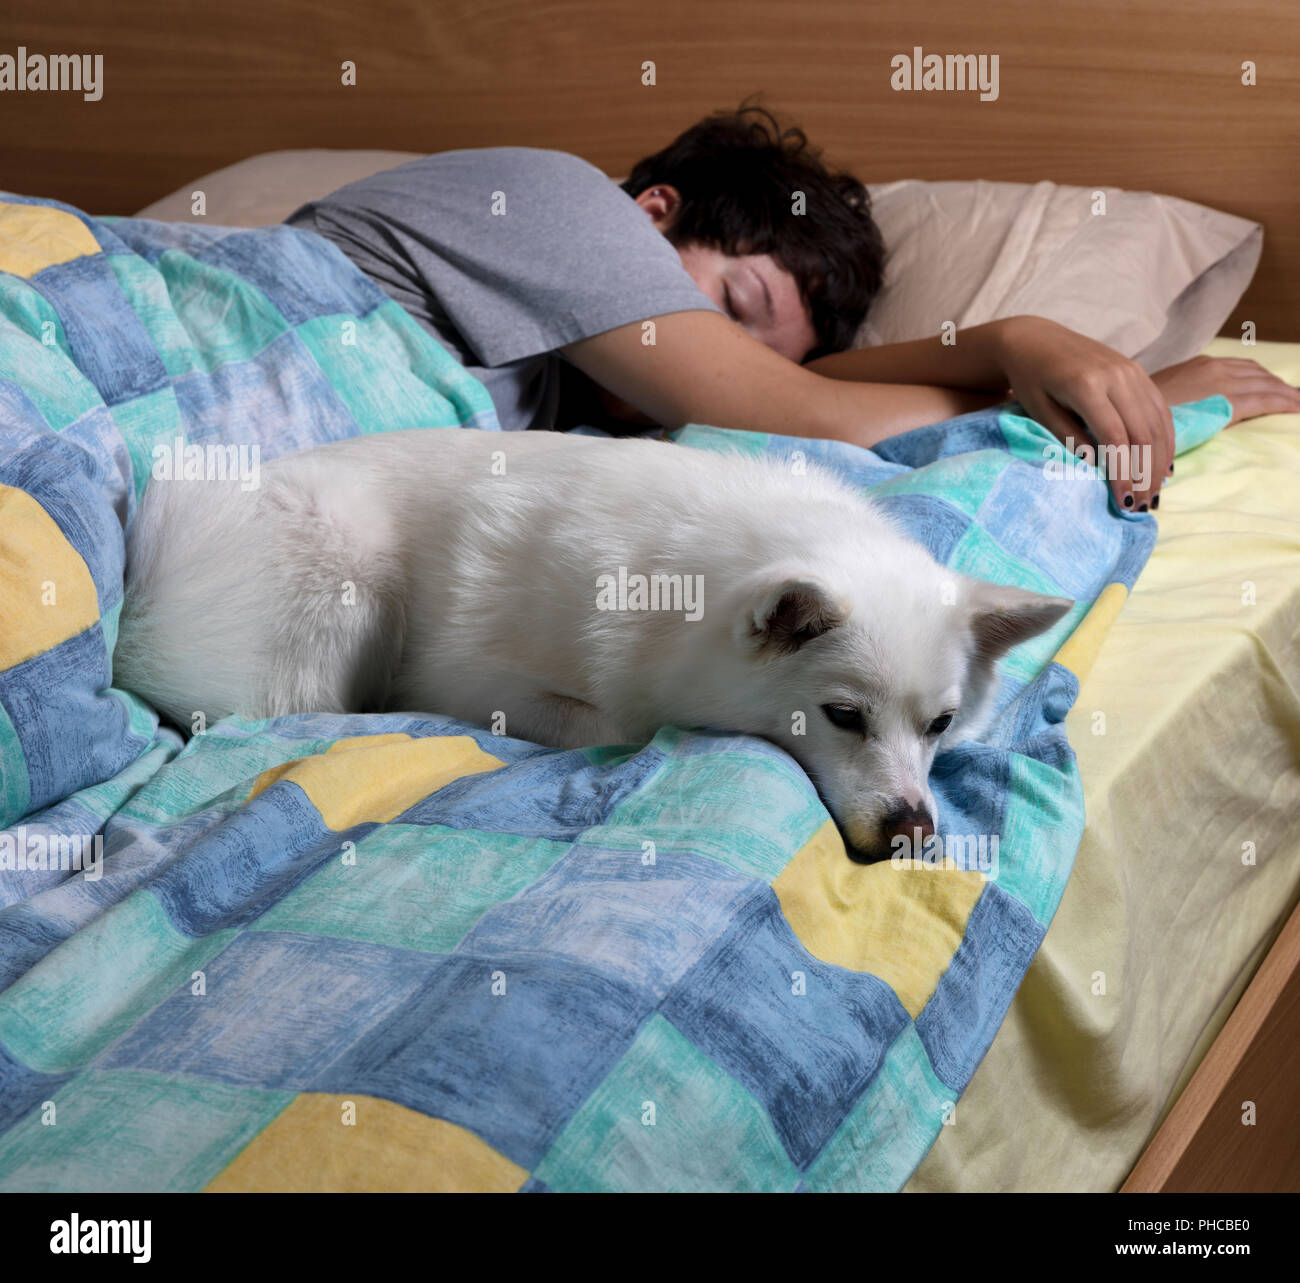 Family dog sleeping with teen girl on bed Stock Photo